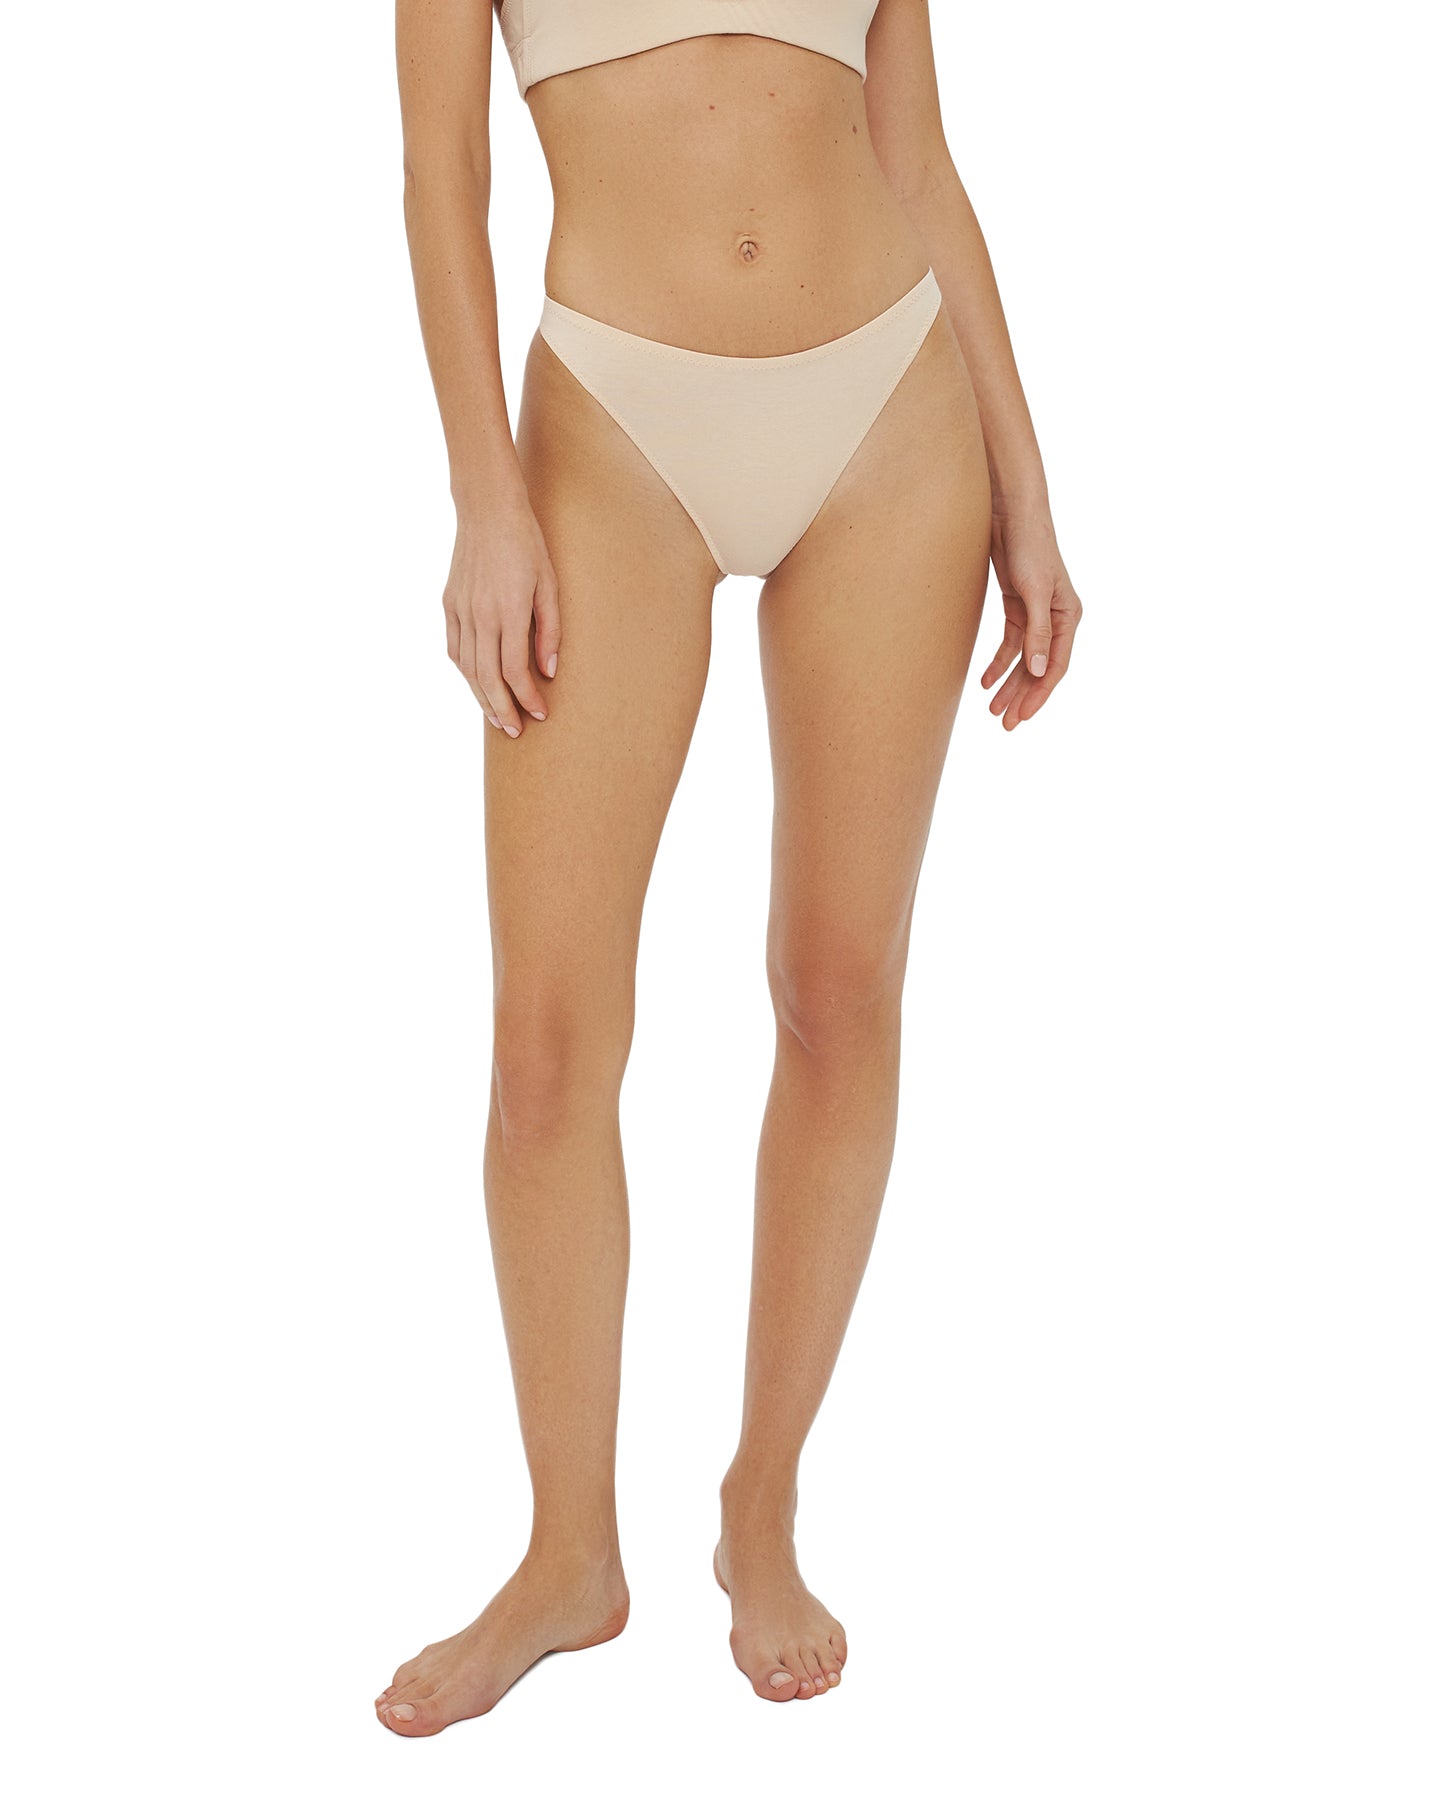 Cajsa Nude Beige Organic Cotton High-Waisted Thong, Women's underwear